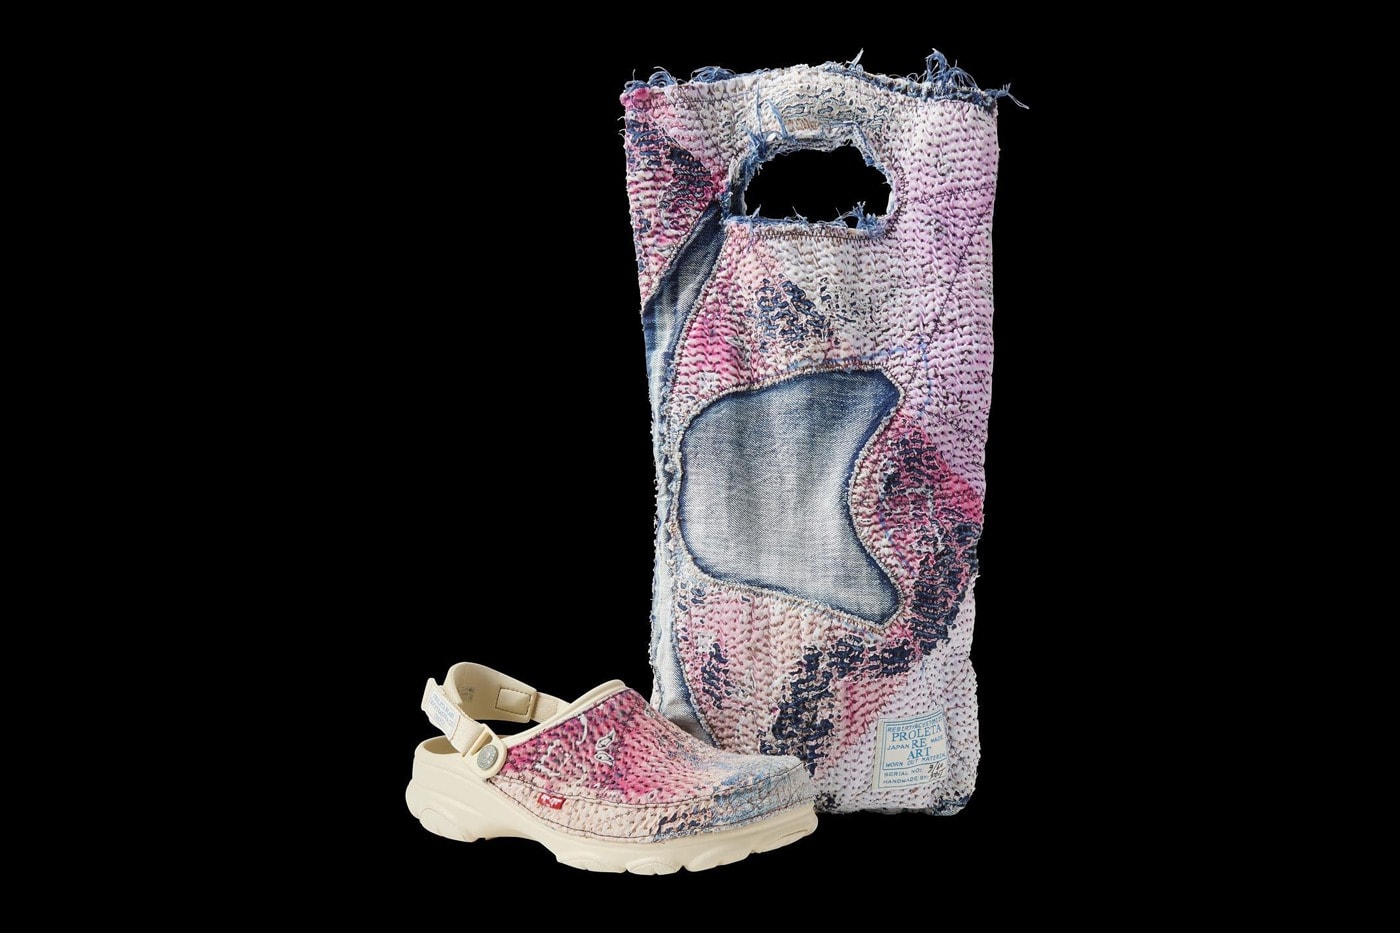 PROLETA RE ART 攜手 Levi's、Crocs 打造特殊鞋款、鞋袋系列